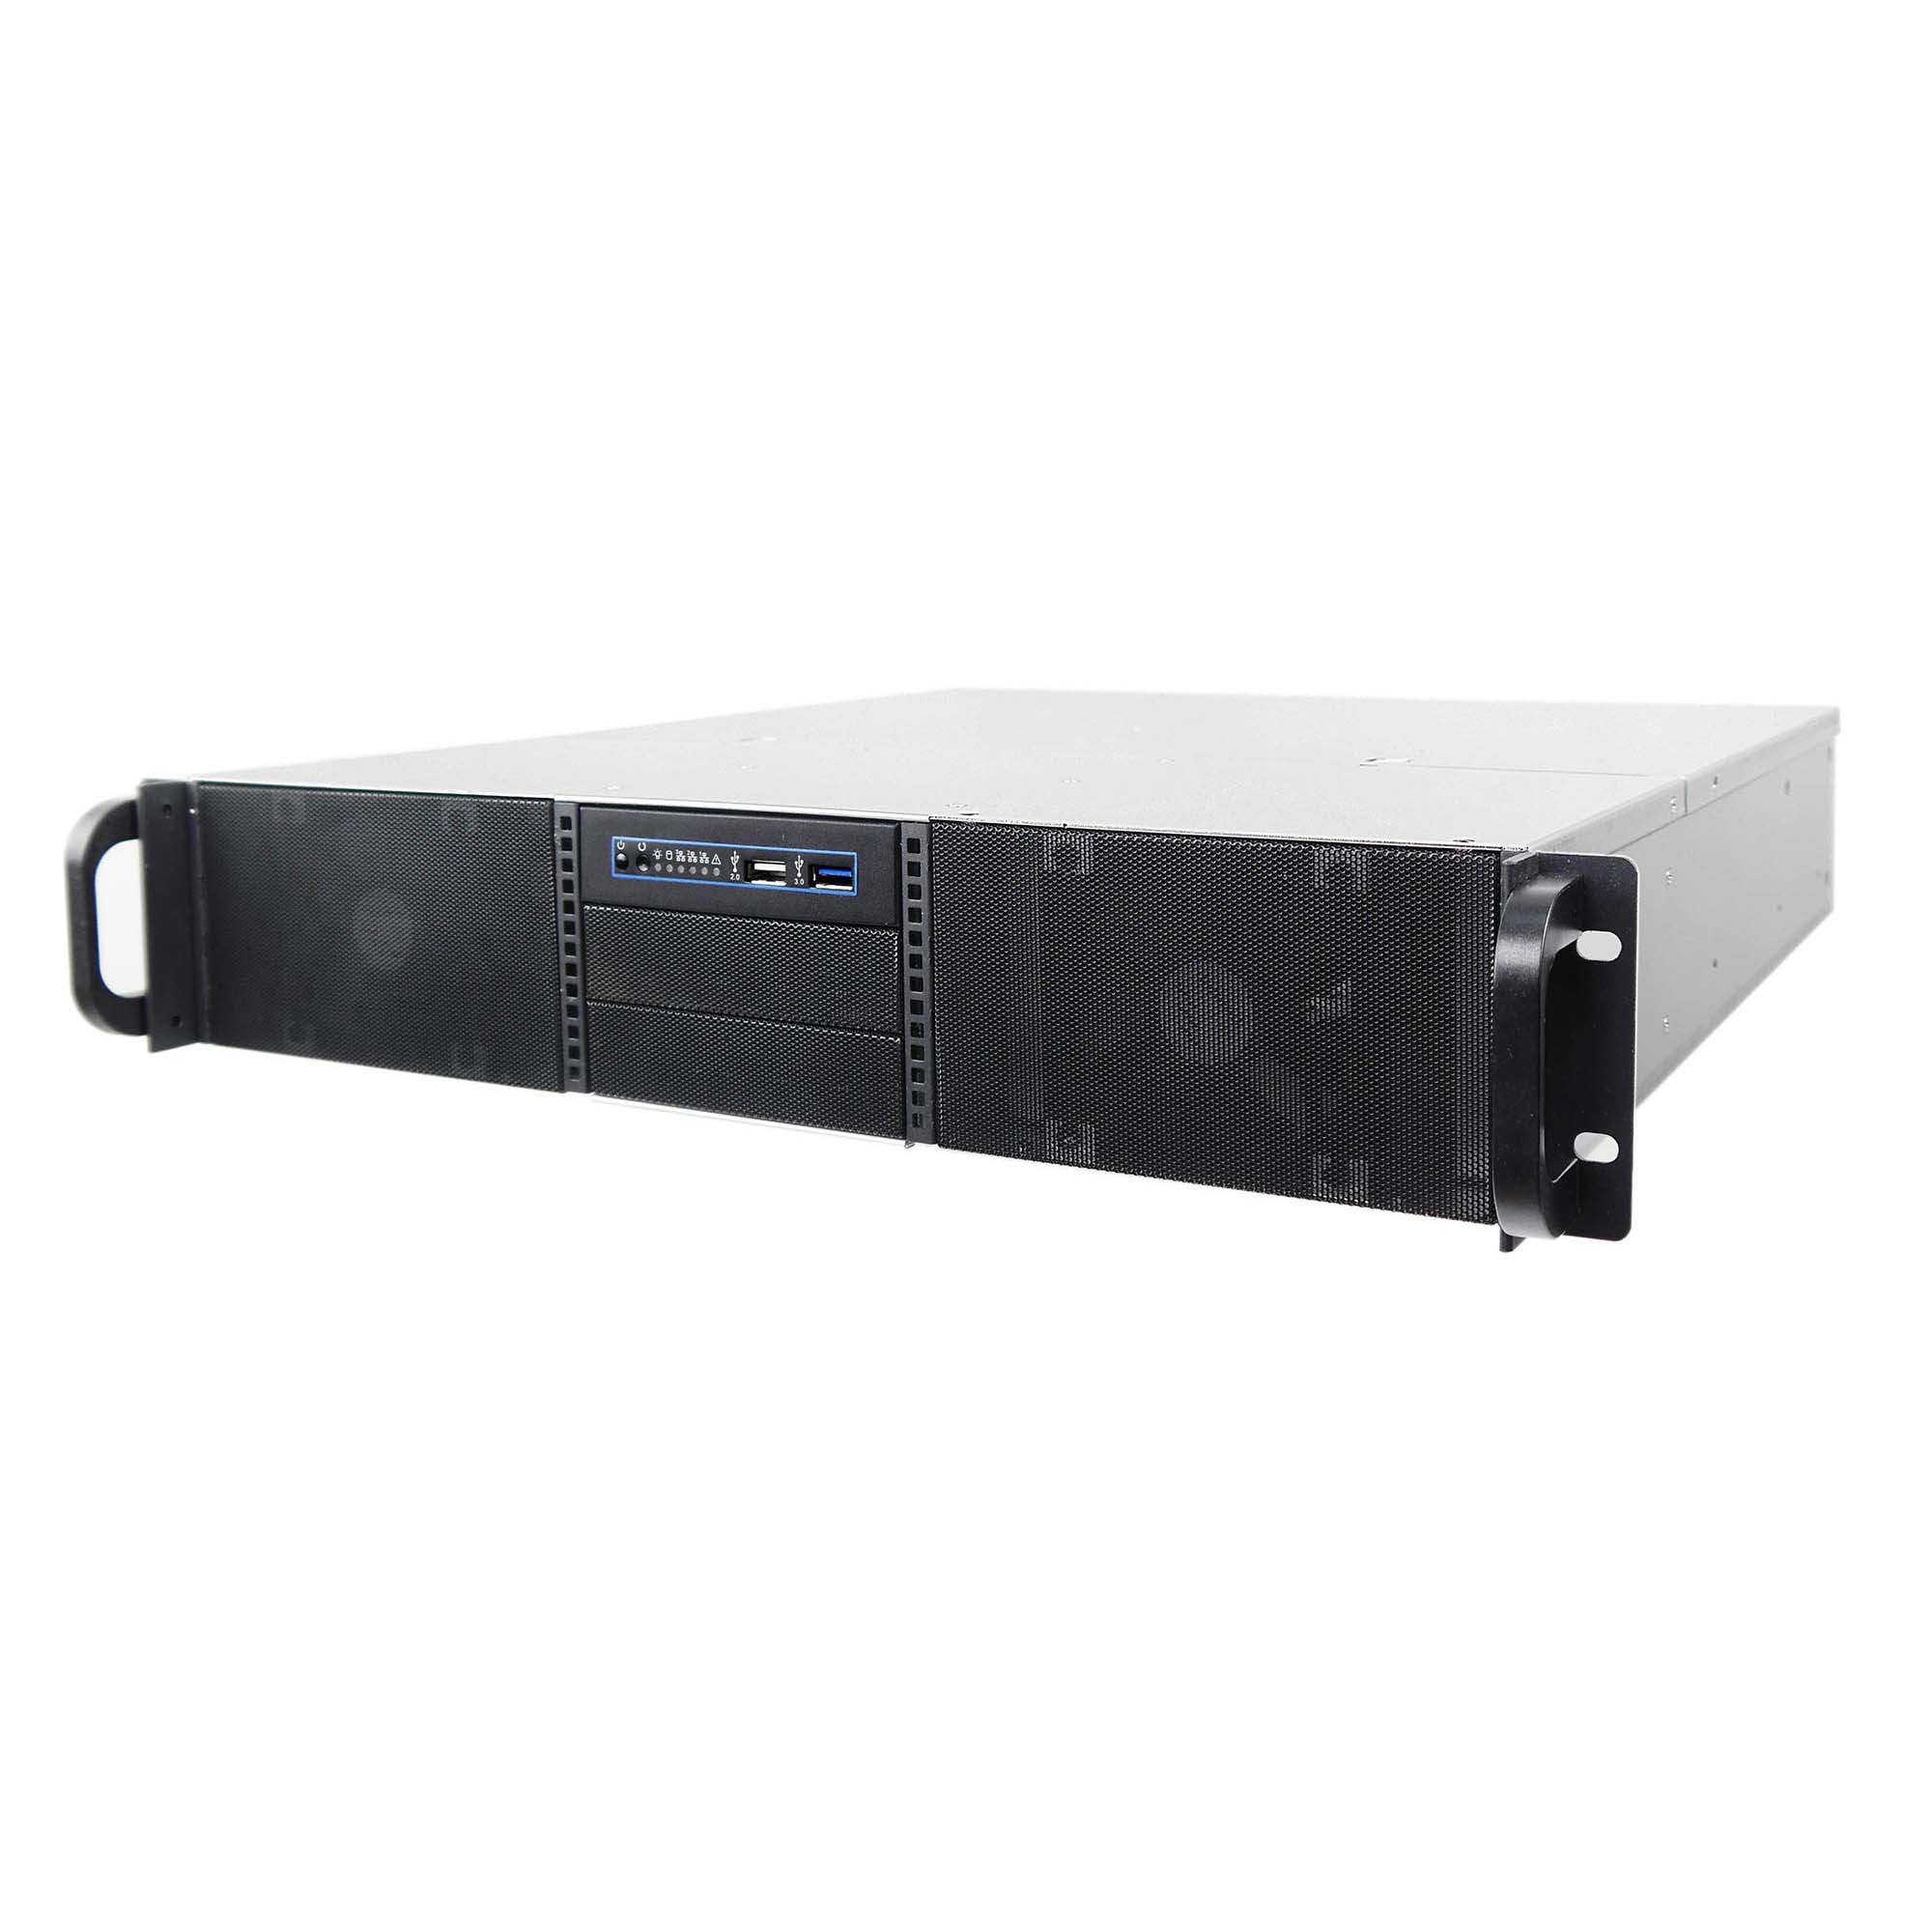 Серверный корпус 2U NR-N2440 2x600Вт (EATX 12x13, 4x5.25ext (6x3.5int), 2x3.5int, 480mm) чёрный, NegoRack